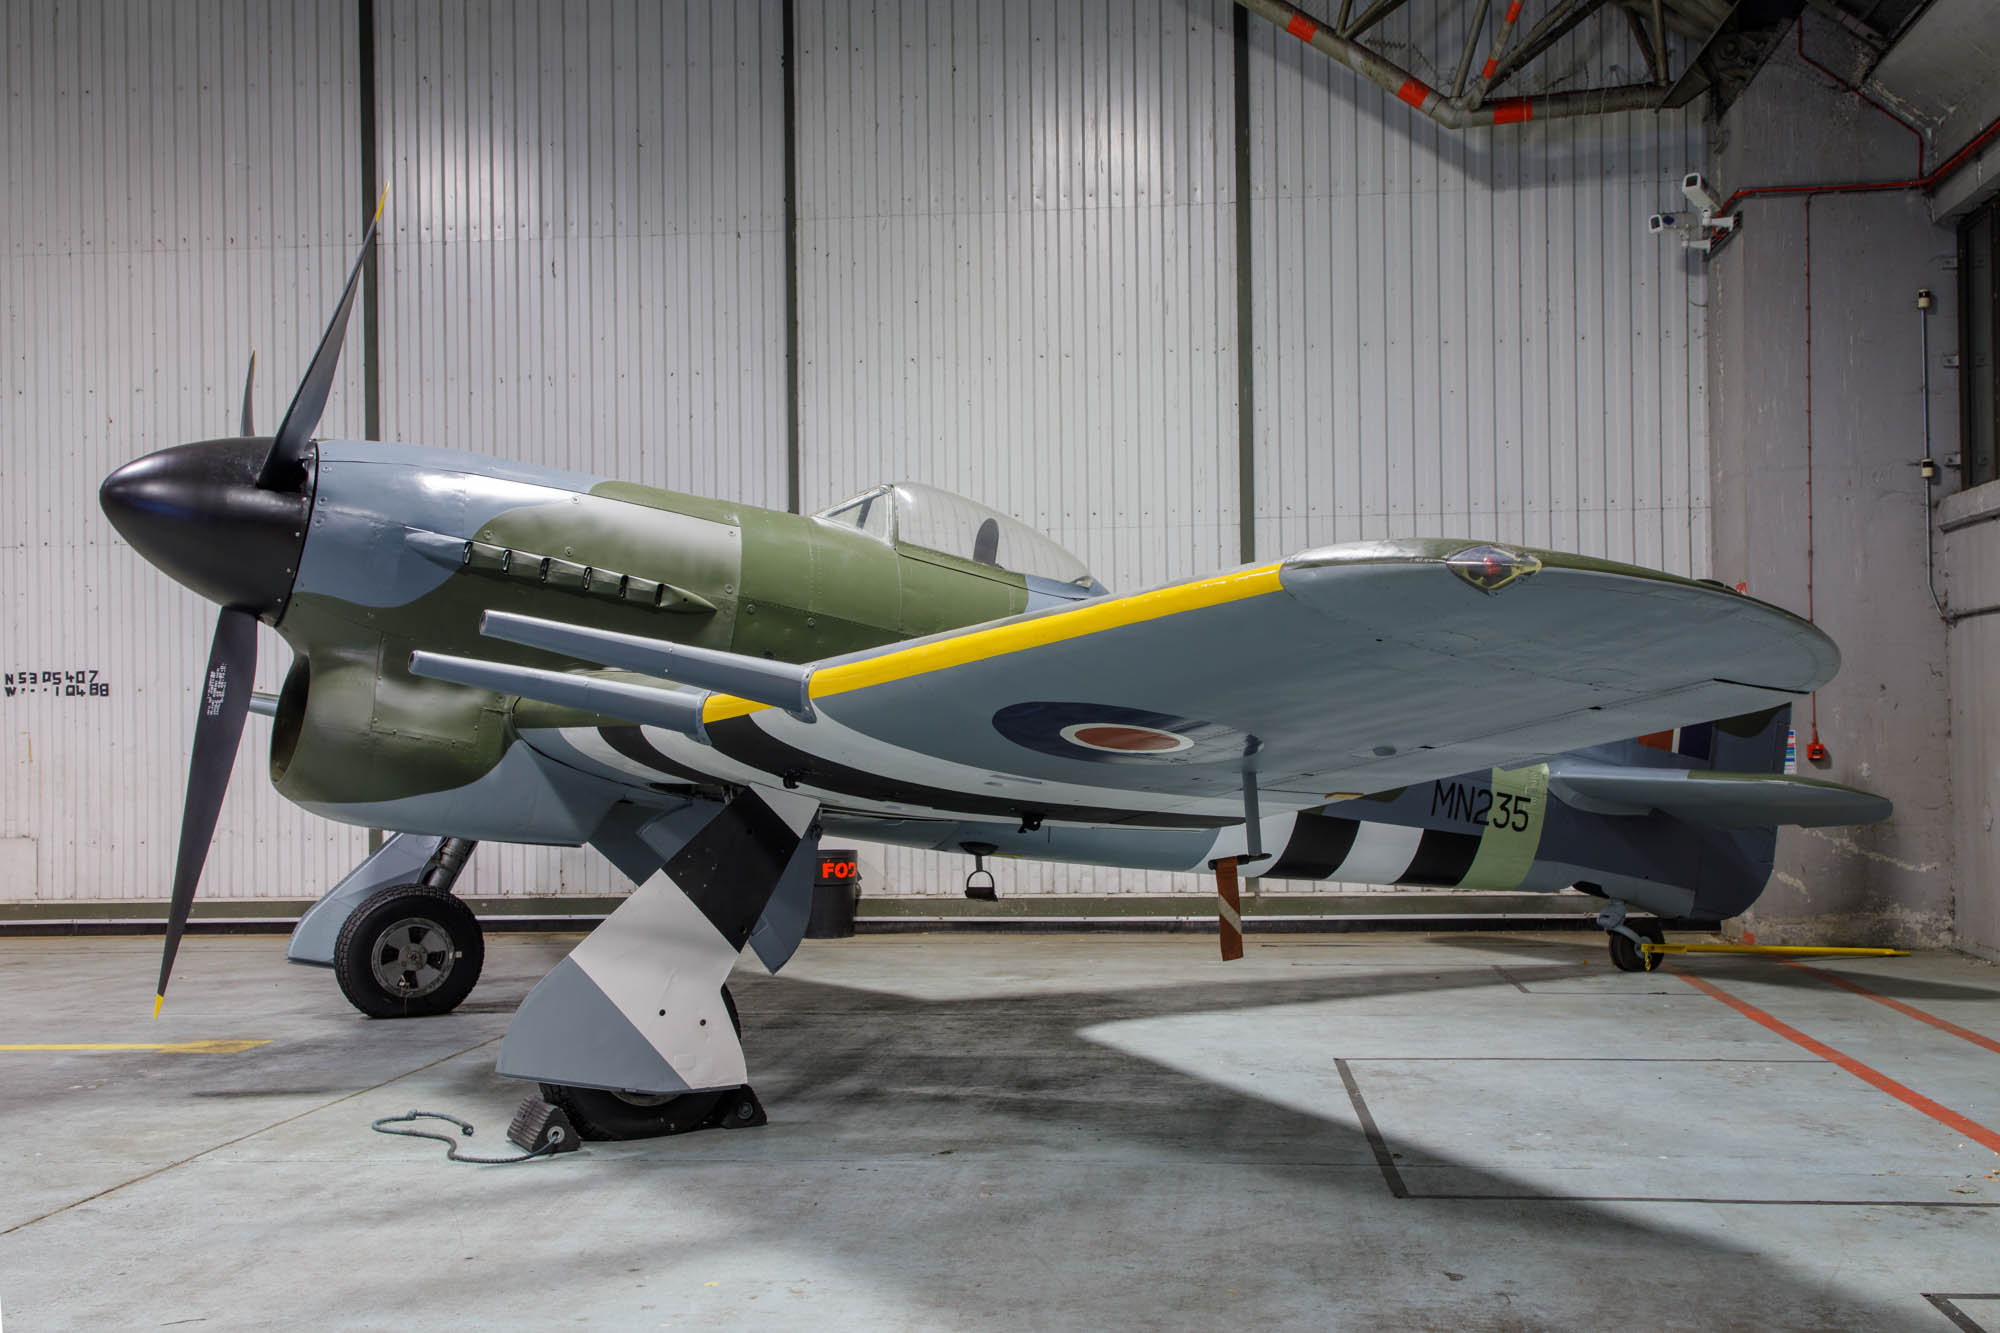 Hawker Typhoon 1B (MN235) on display at RAF Coningsby